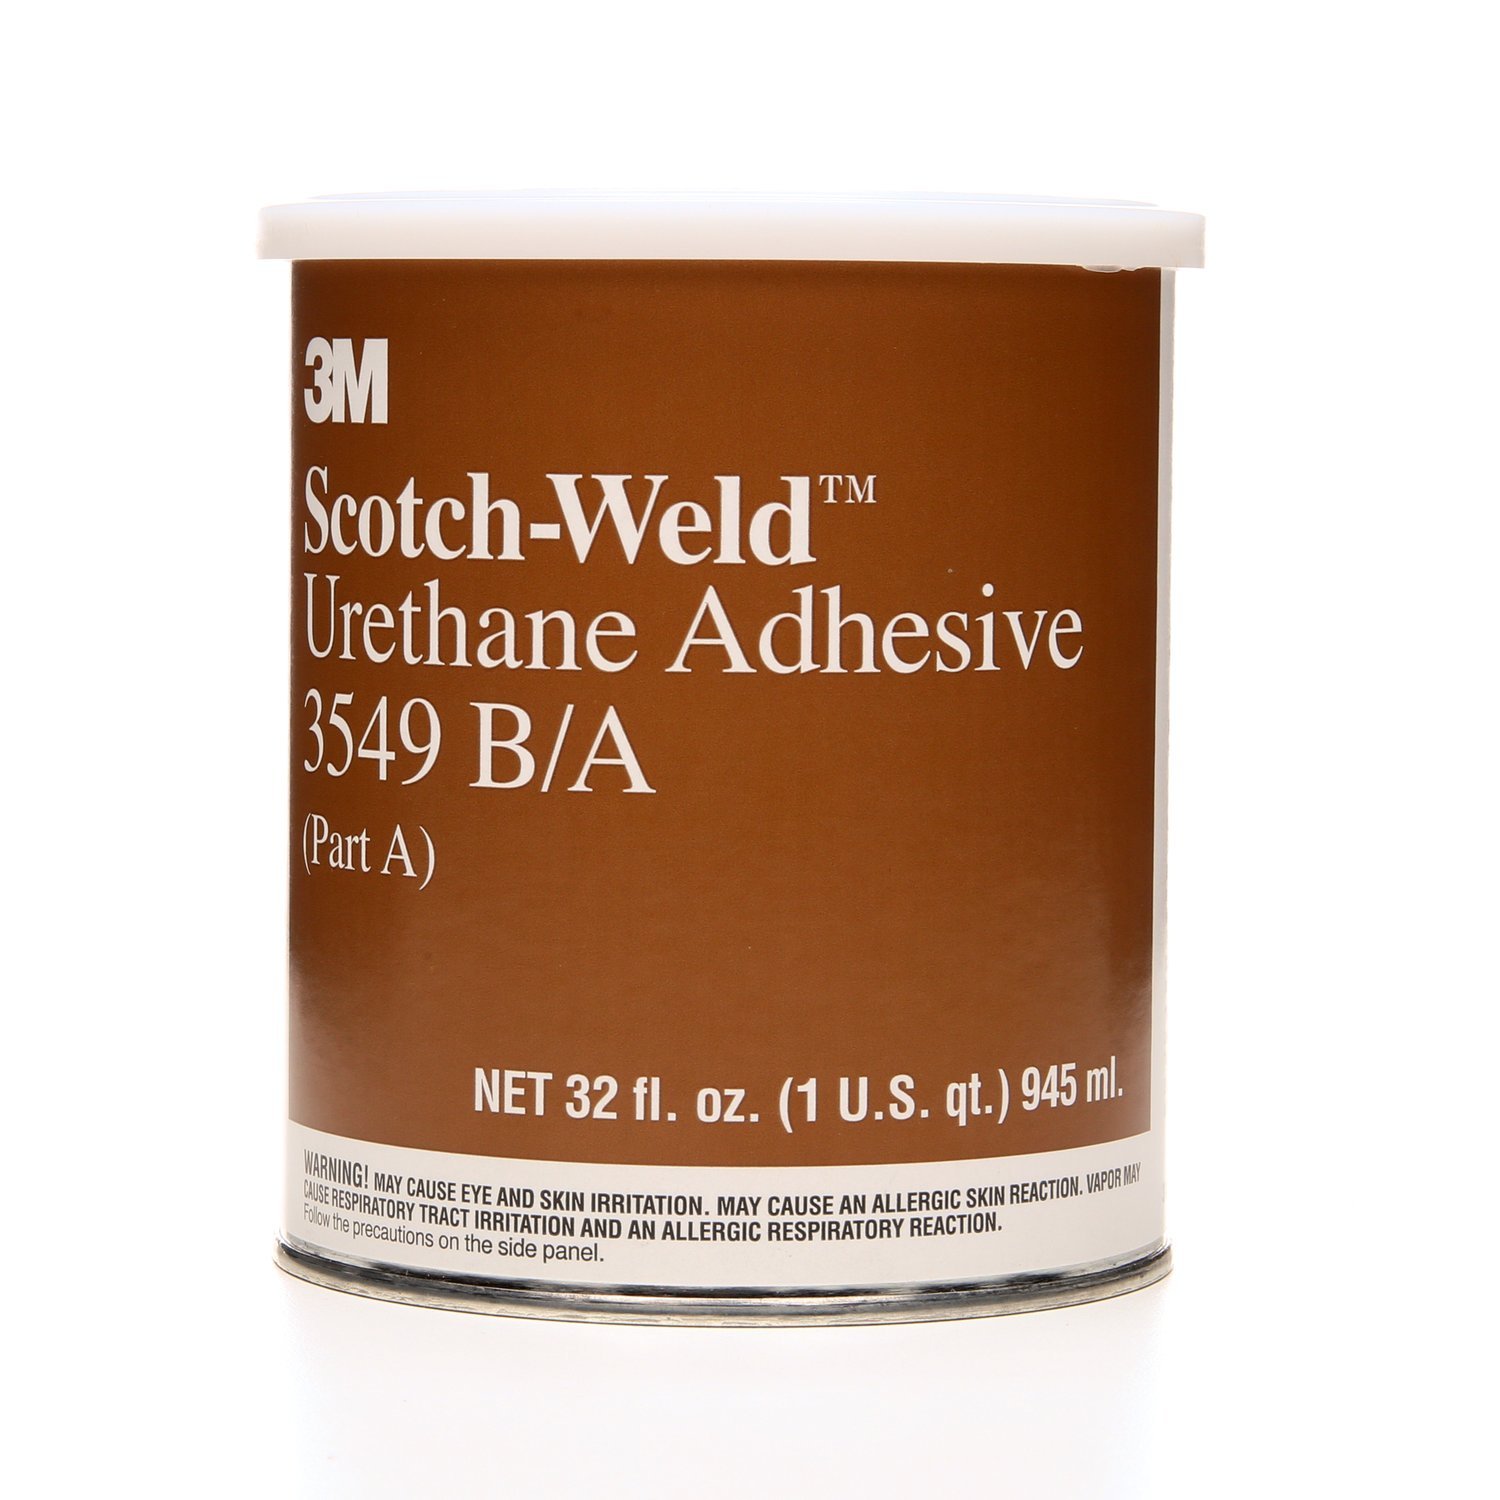 7000046485 - 3M Scotch-Weld Urethane Adhesive 3549, Brown, Part B/A, Quart, 6
Kit/Case